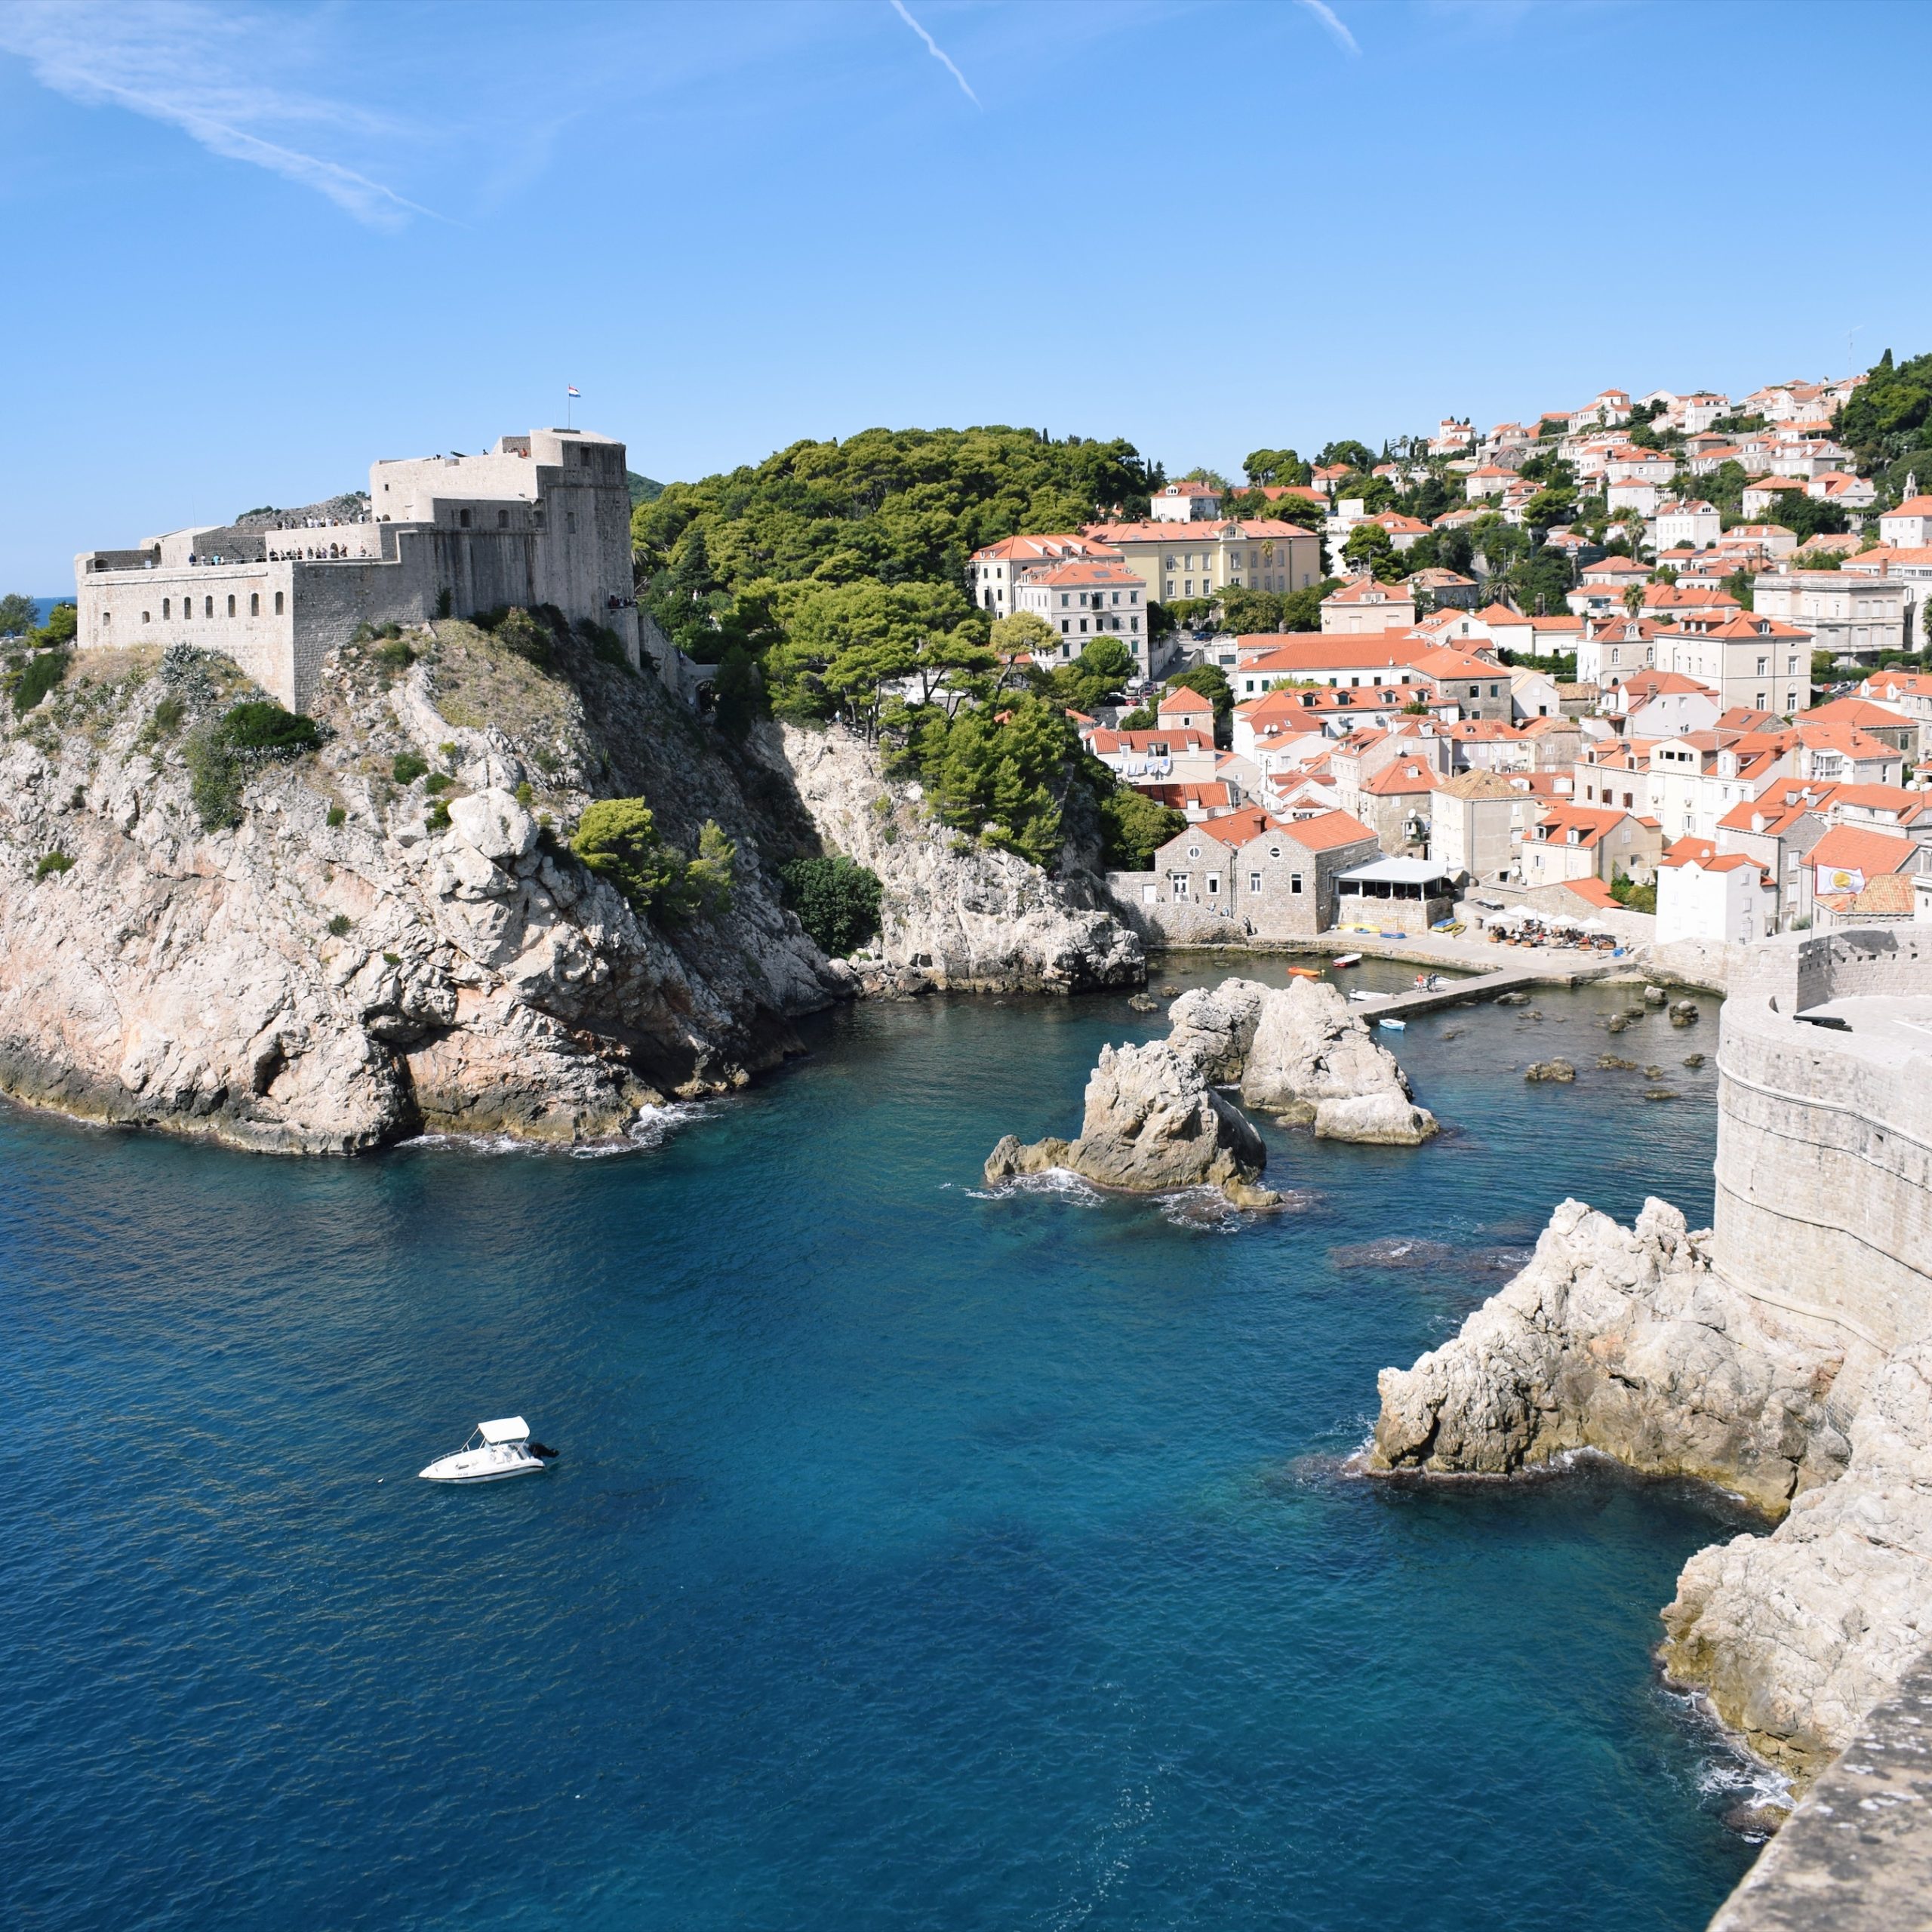 Day 2: Dubrovnik City Walls and Lokrum Island